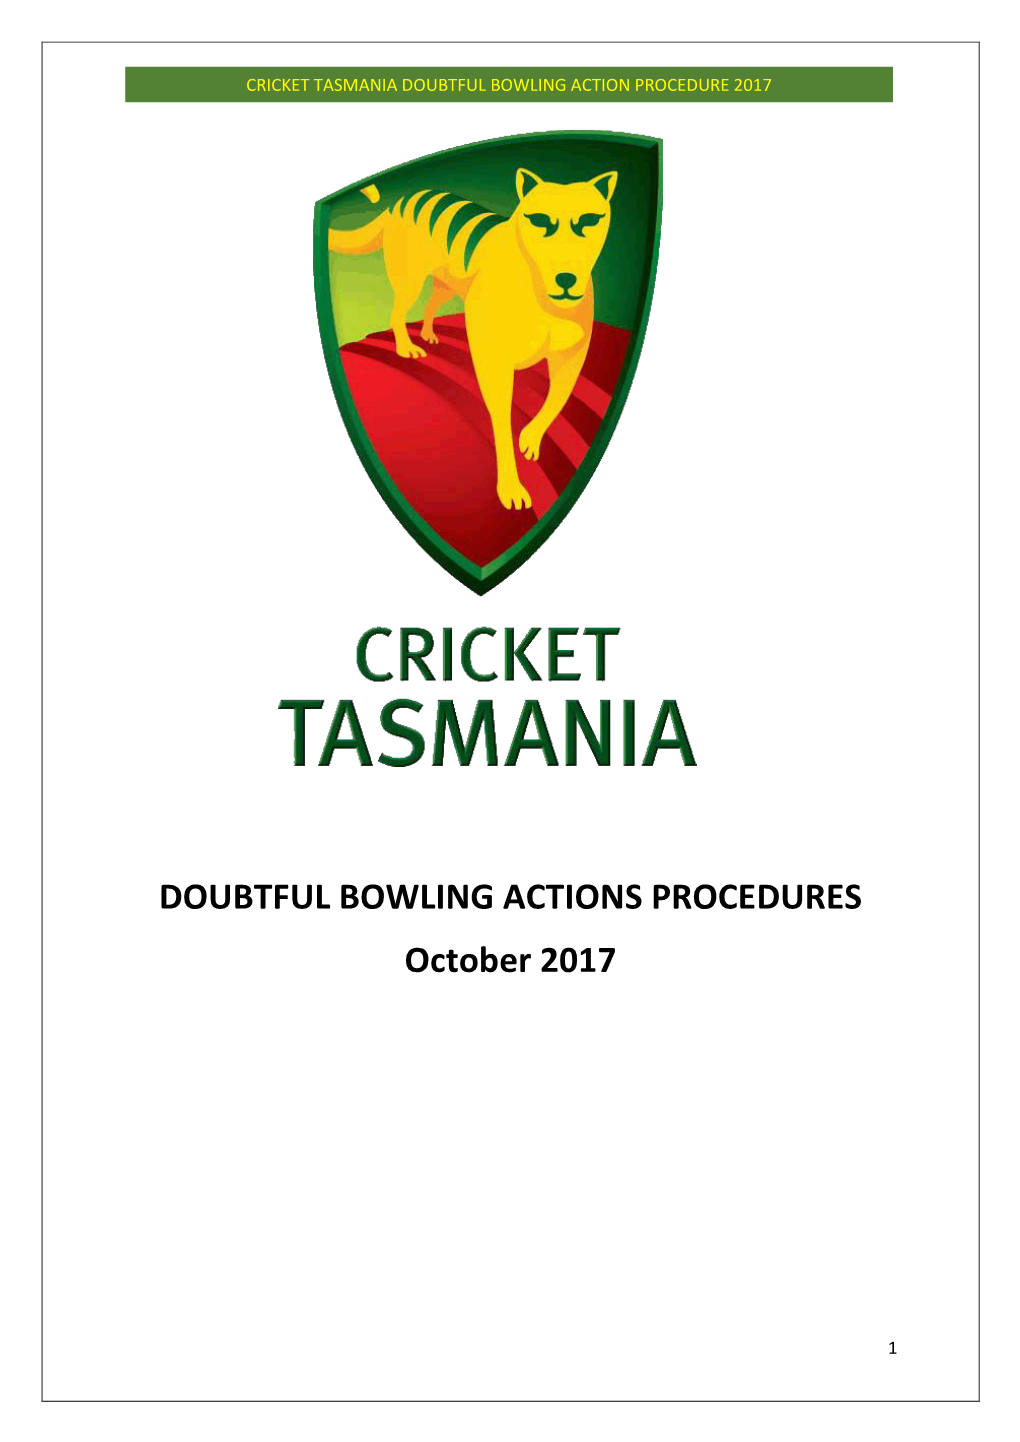 Cricket Tasmania Doubtful Bowling Action Procedure 2017